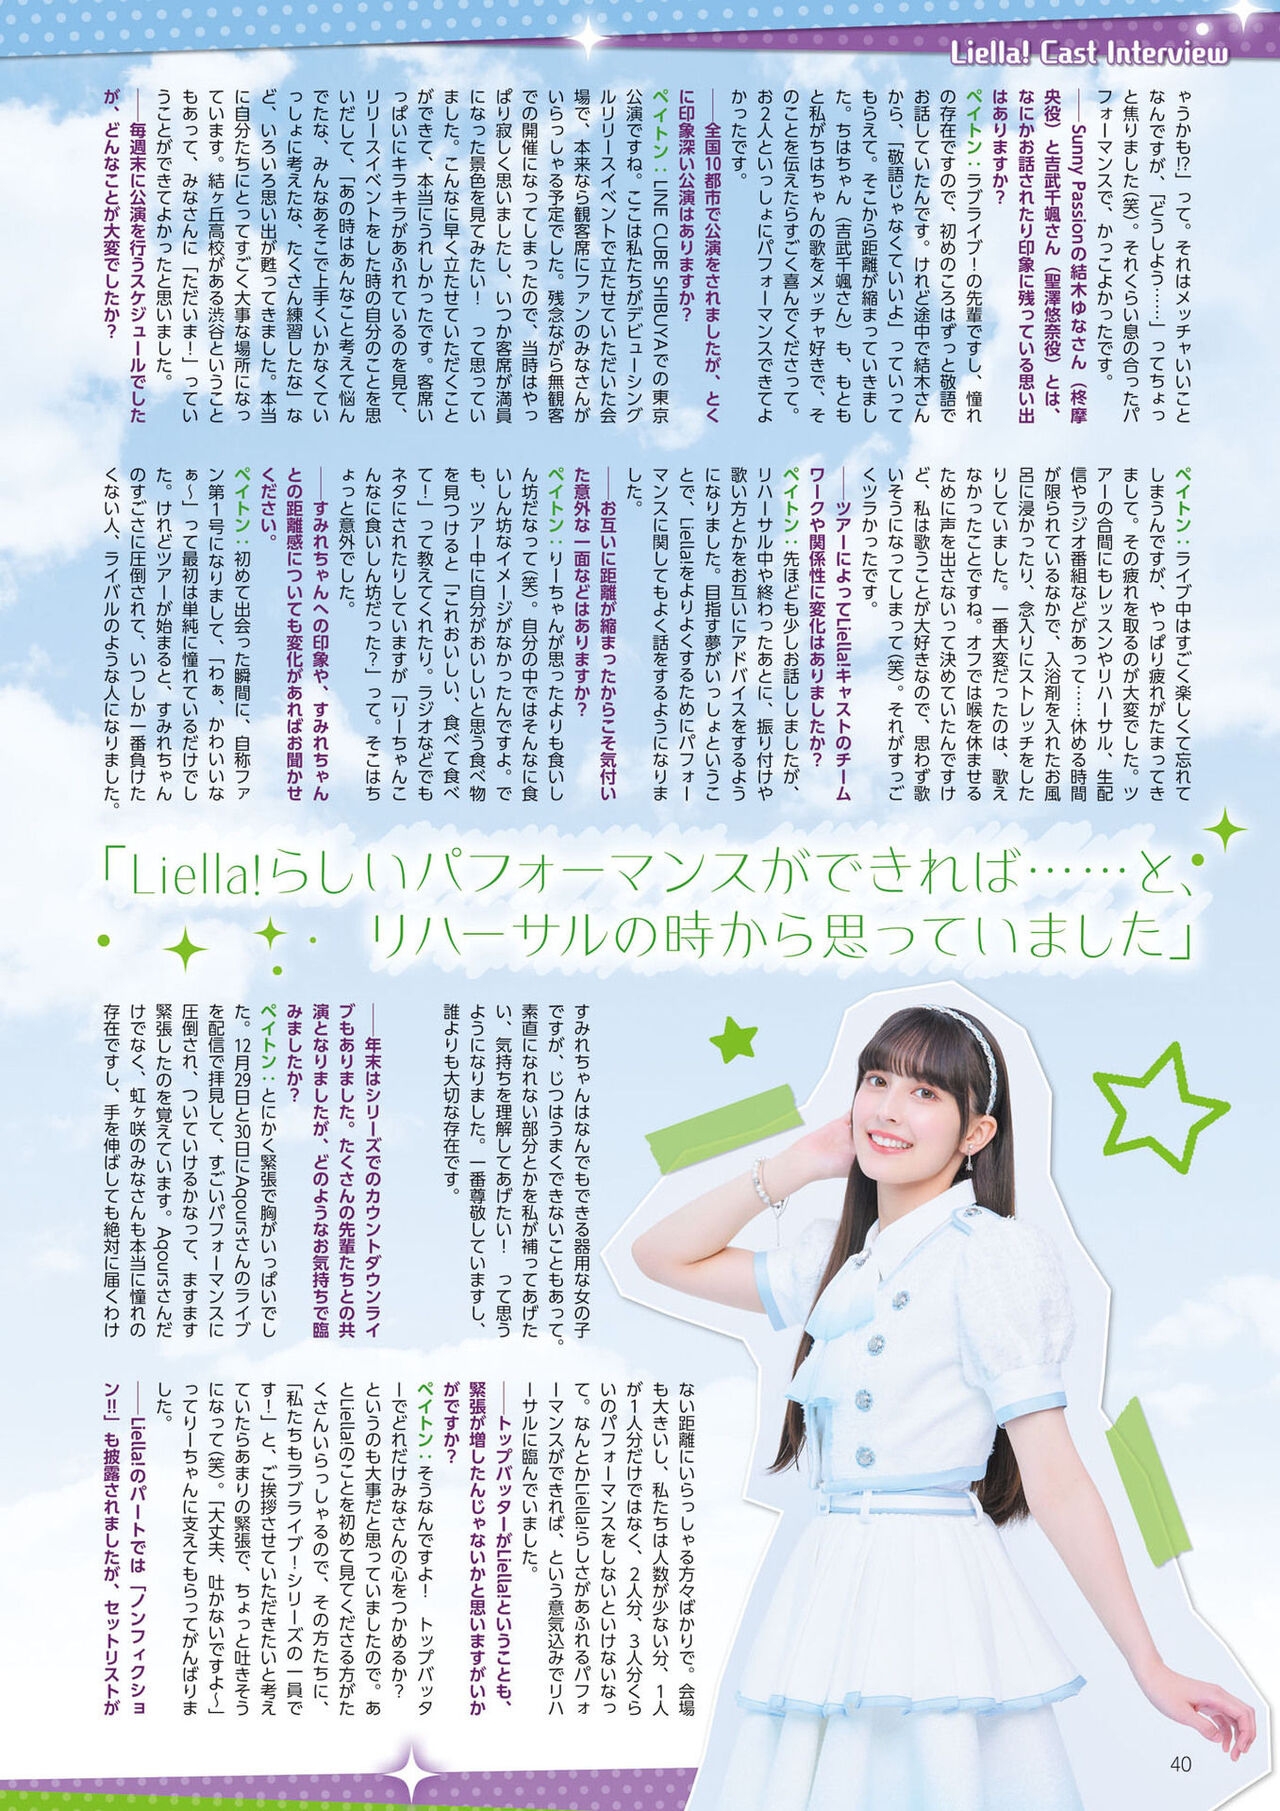 Dengeki G's Magazine #297 - April 2022 37